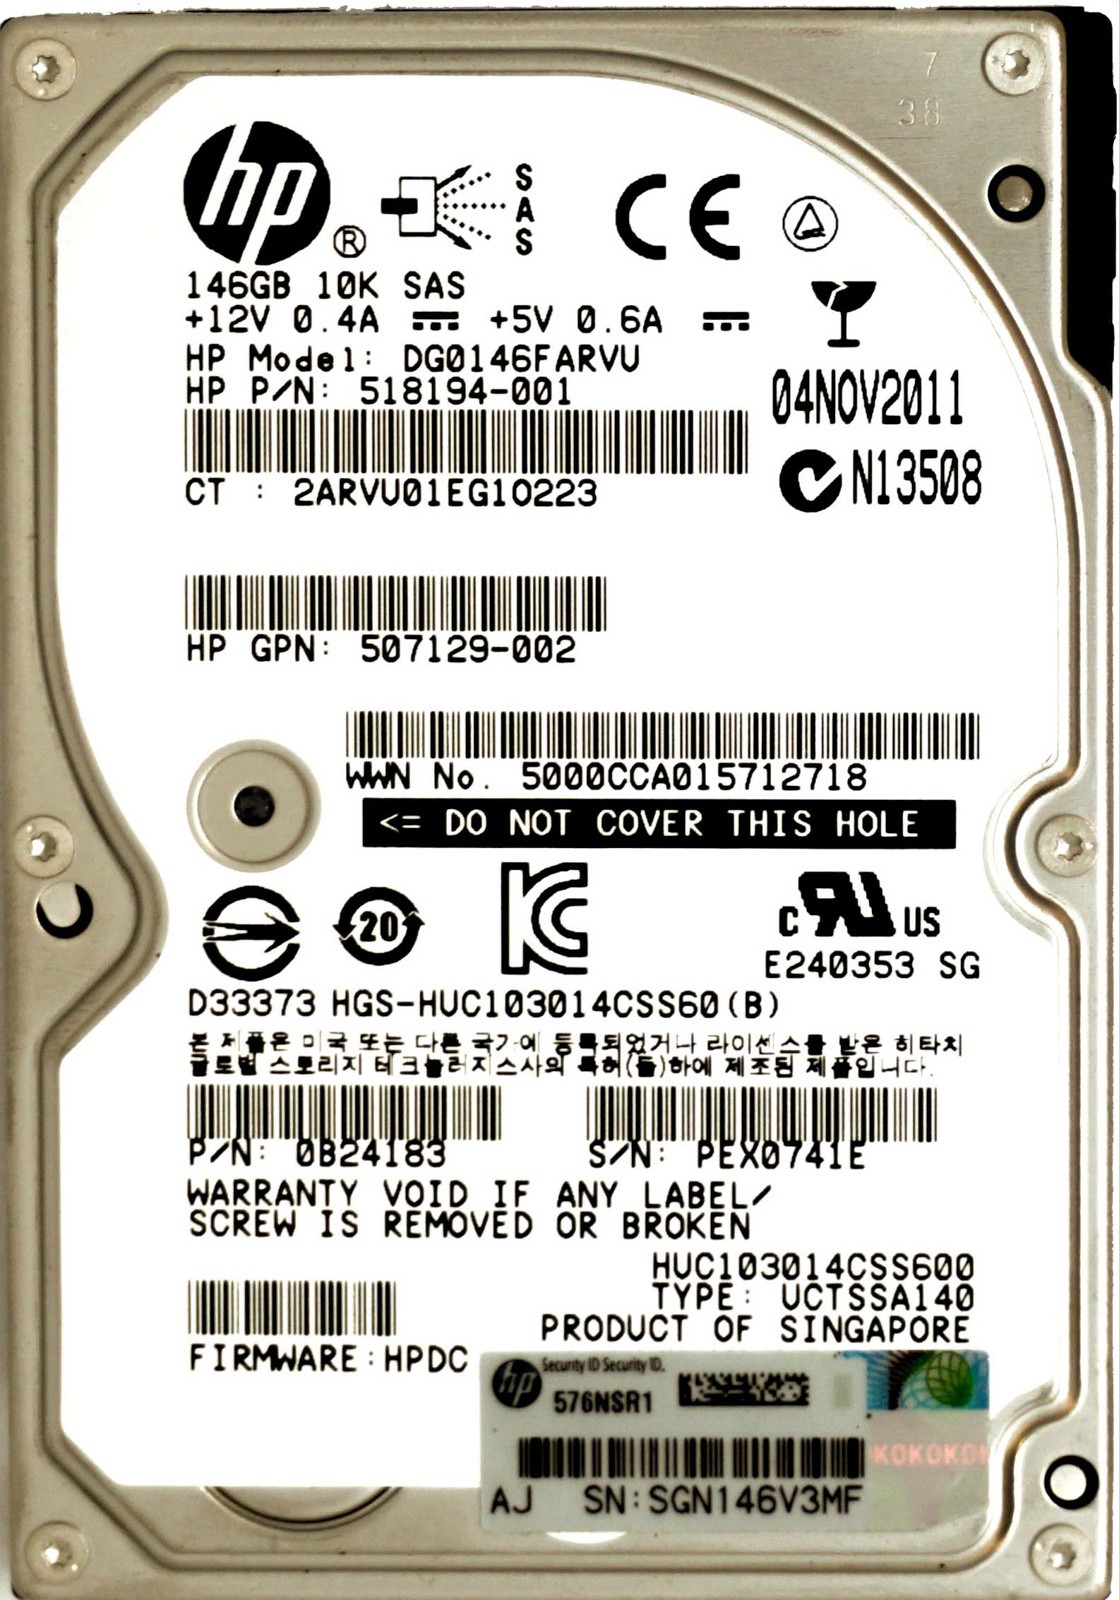 HP (518194-001) 146GB Dual Port SAS-2 (SFF 2.5 ) 6Gbps 10K HDD